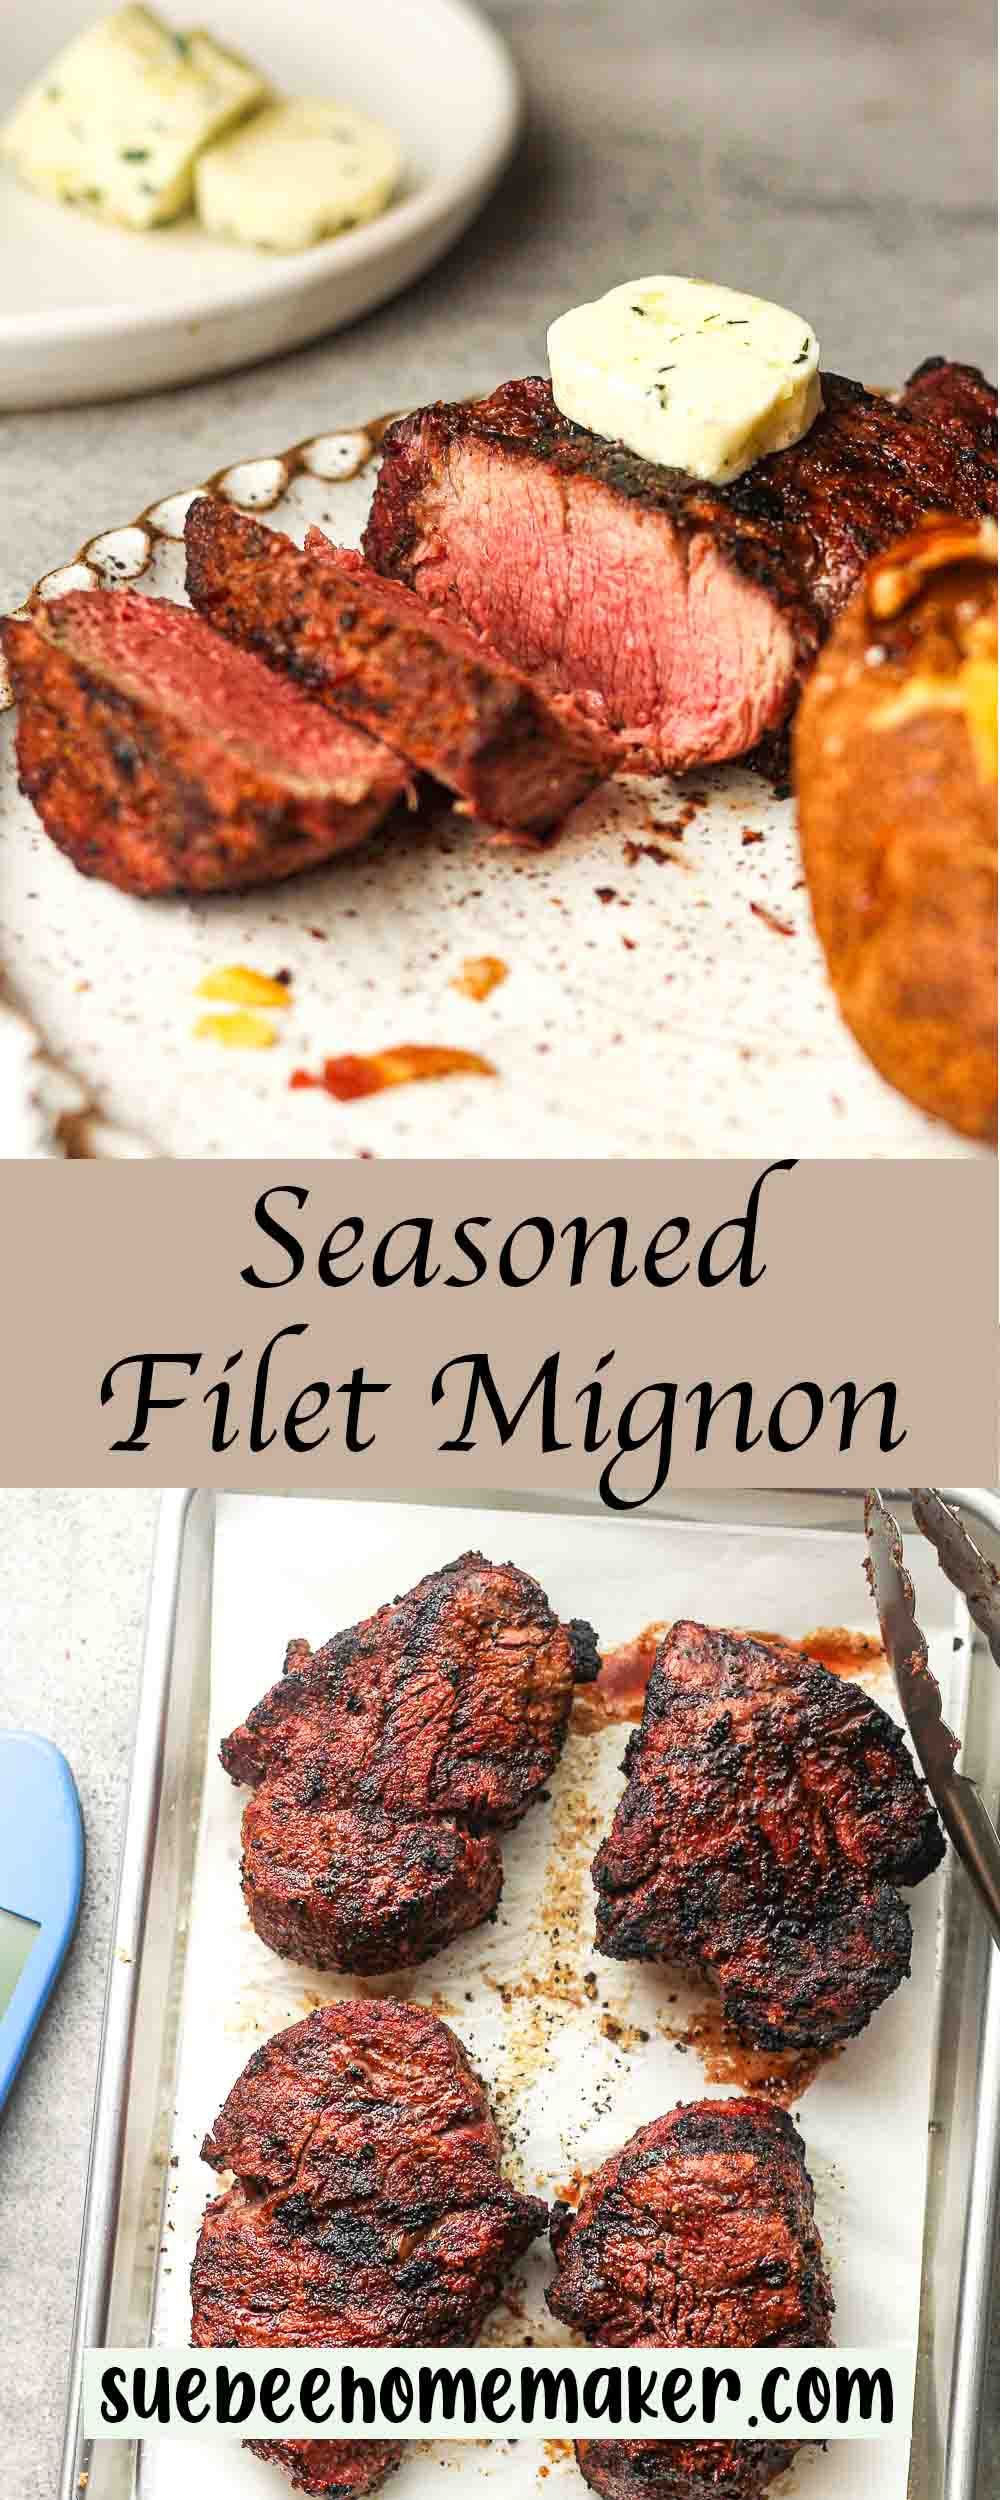 A collage of photos of seasoned filet mignon.